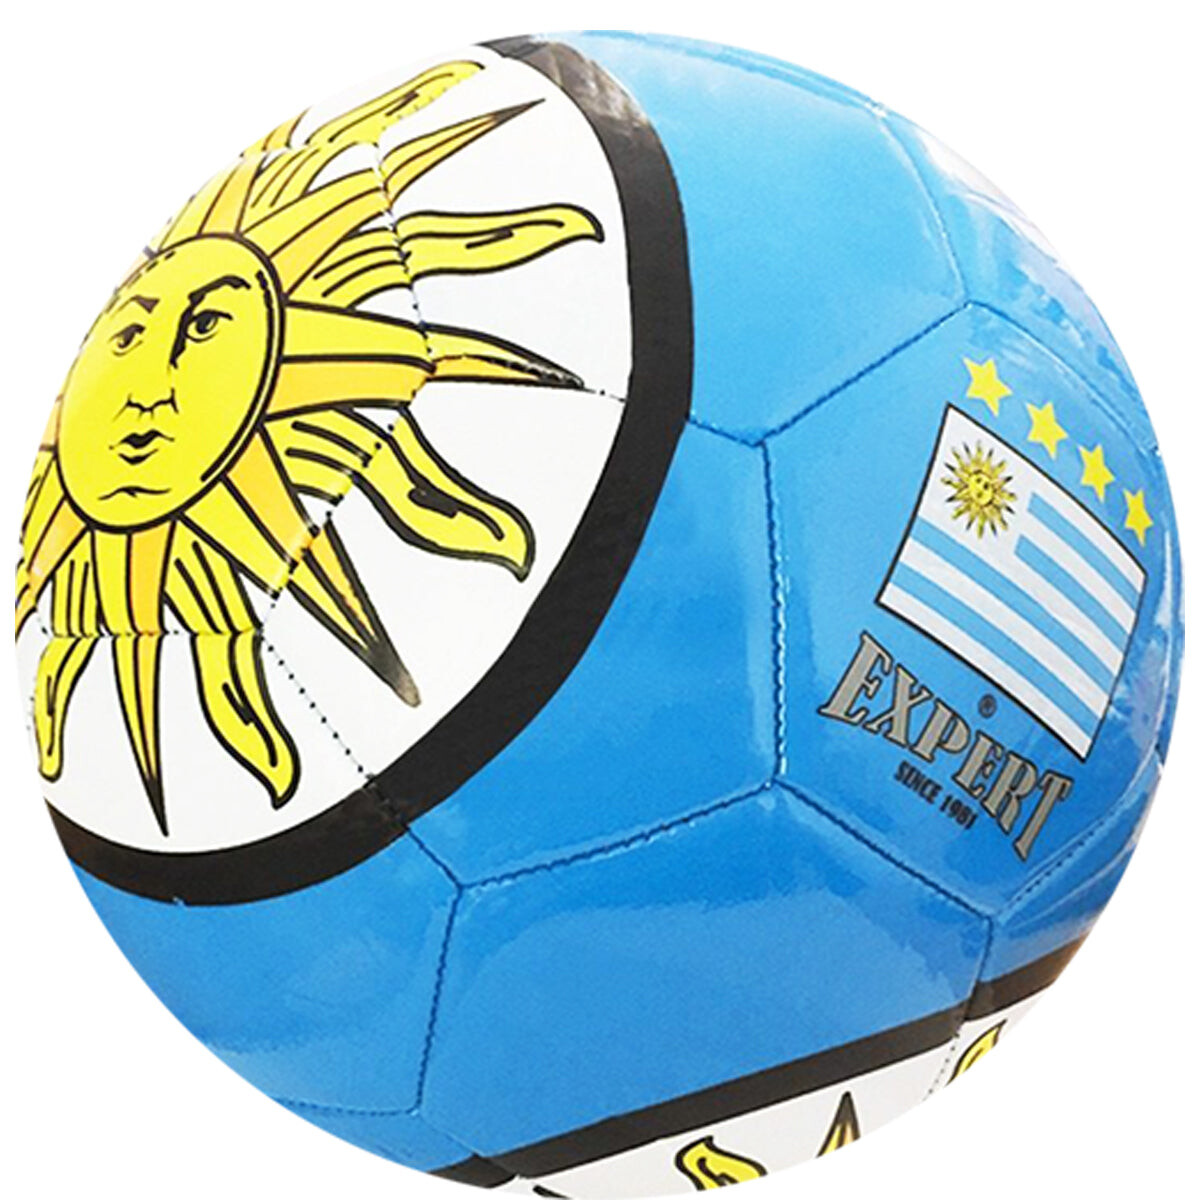 Pelota Expert N2 Diseño Uruguay Fútbol Calidad - Celeste 